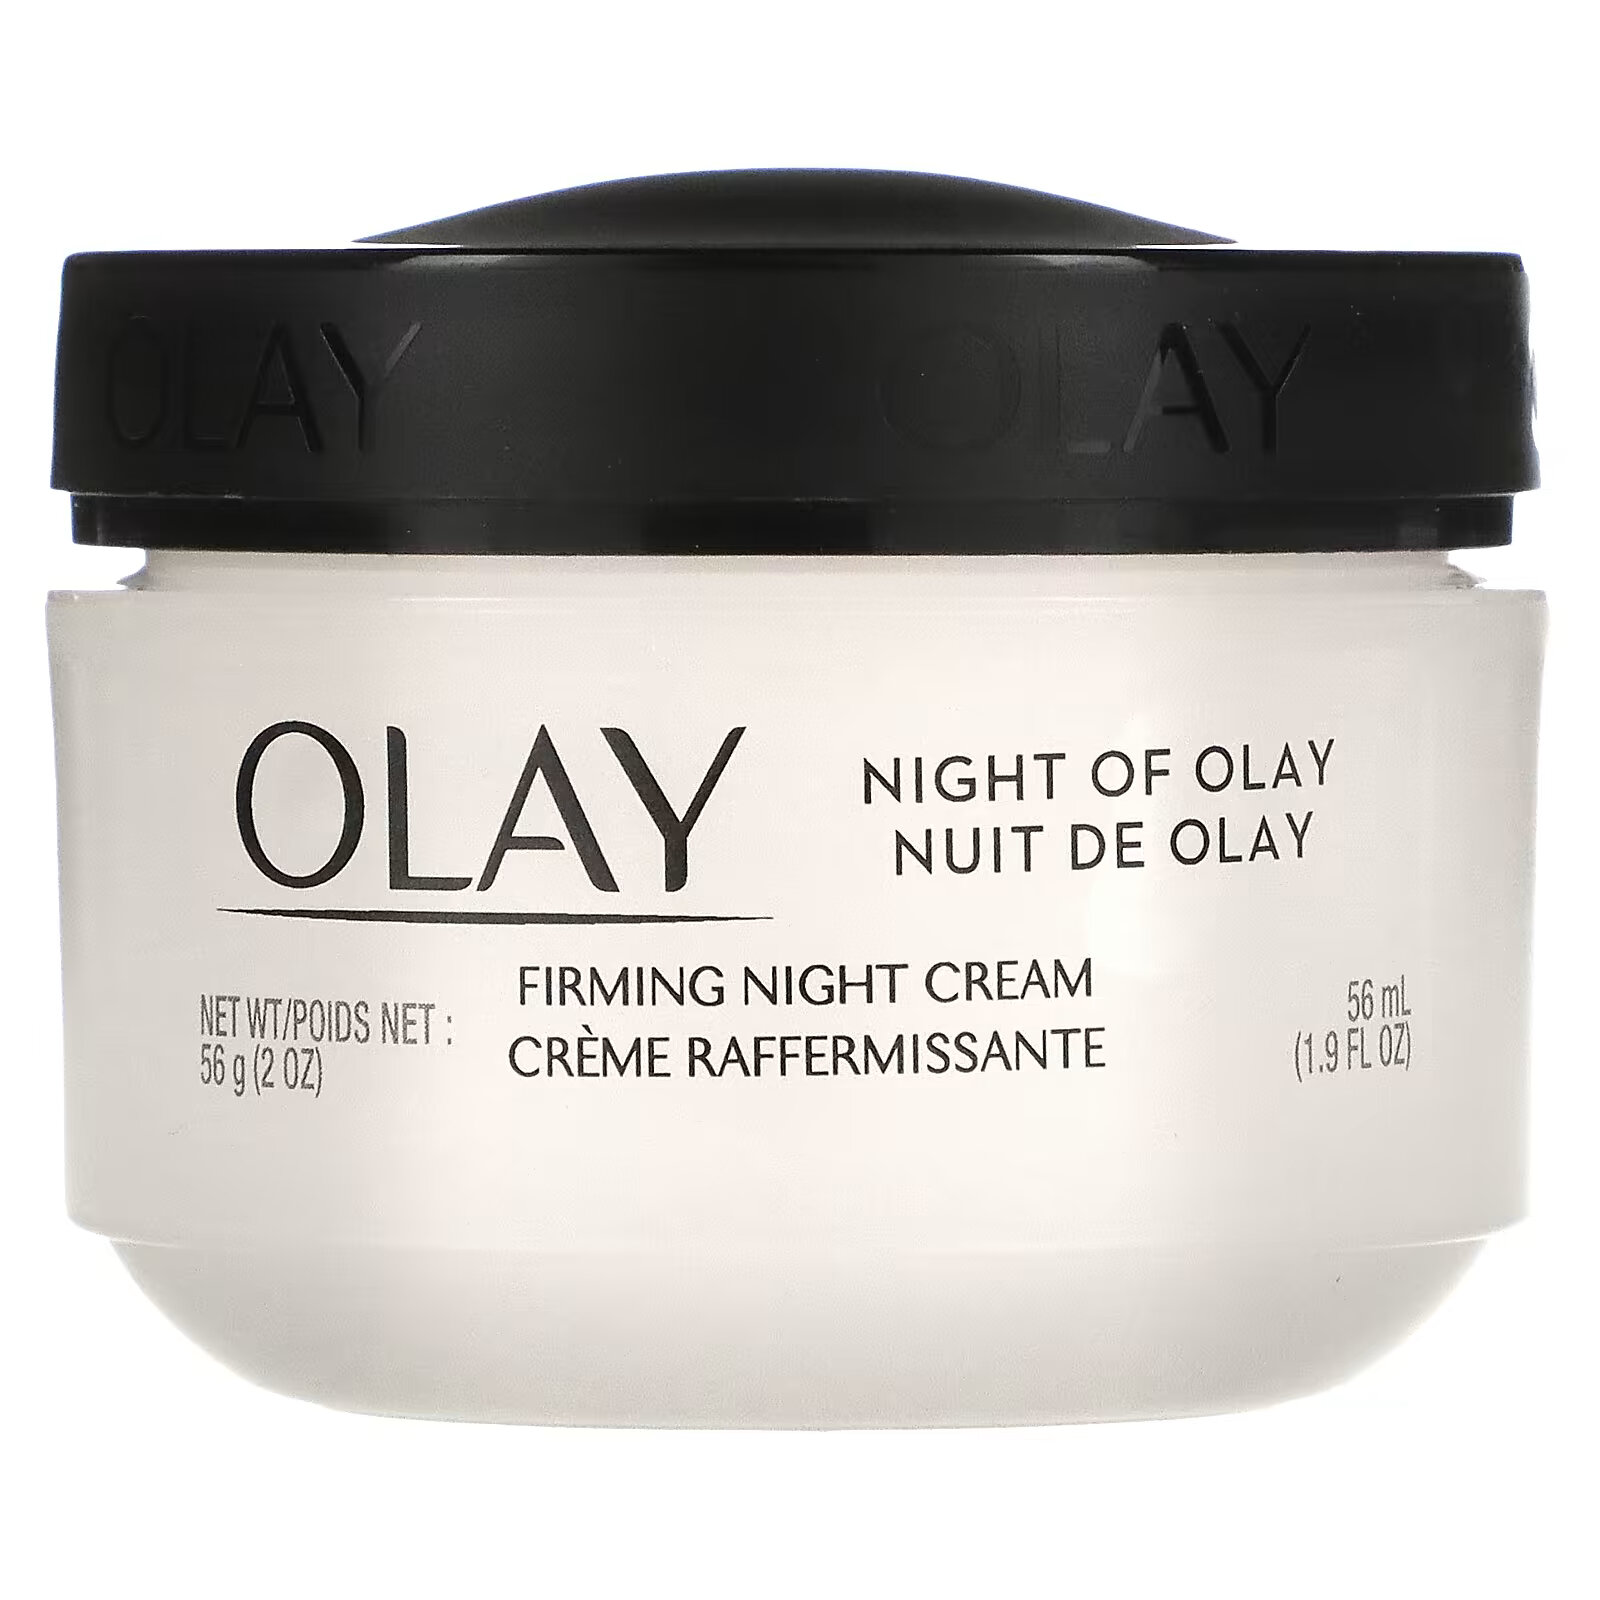 Olay, Night of Olay, укрепляющий ночной крем, 56 мл (1,9 жидк. Унции) olay night of olay укрепляющий ночной крем 56 мл 1 9 жидк унции